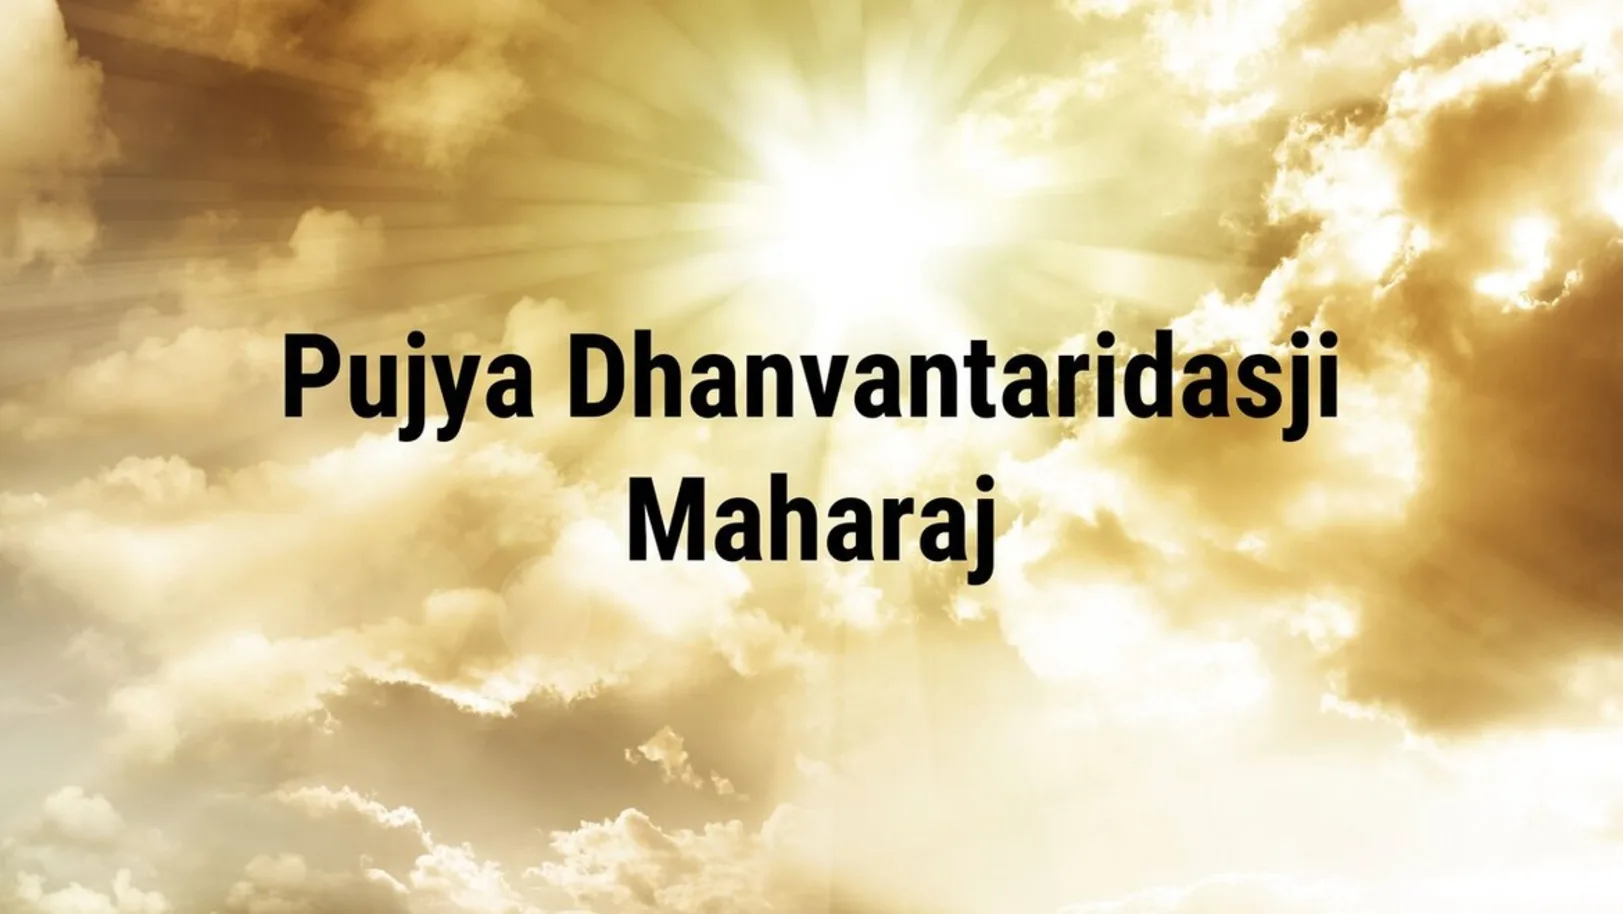 Pujya Dhanvantaridasji Maharaj Streaming Now On Aastha Bhajan